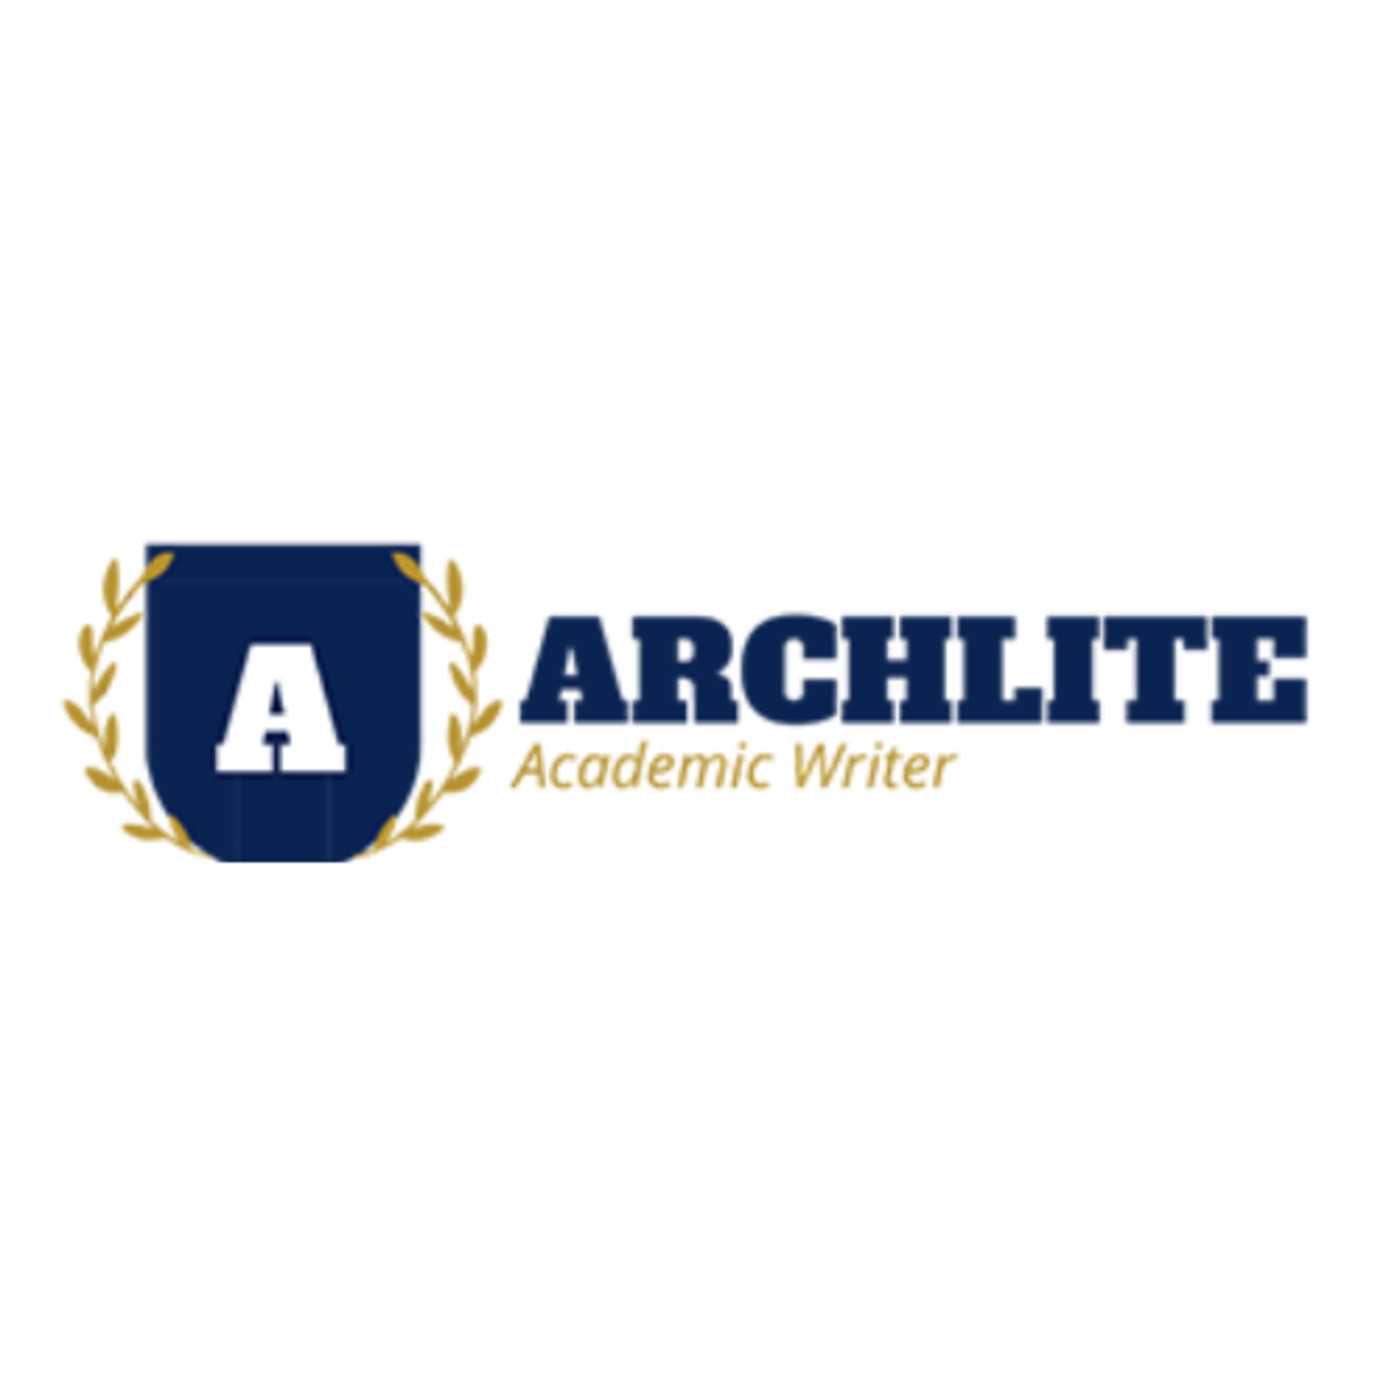 Archlite Assignment Help